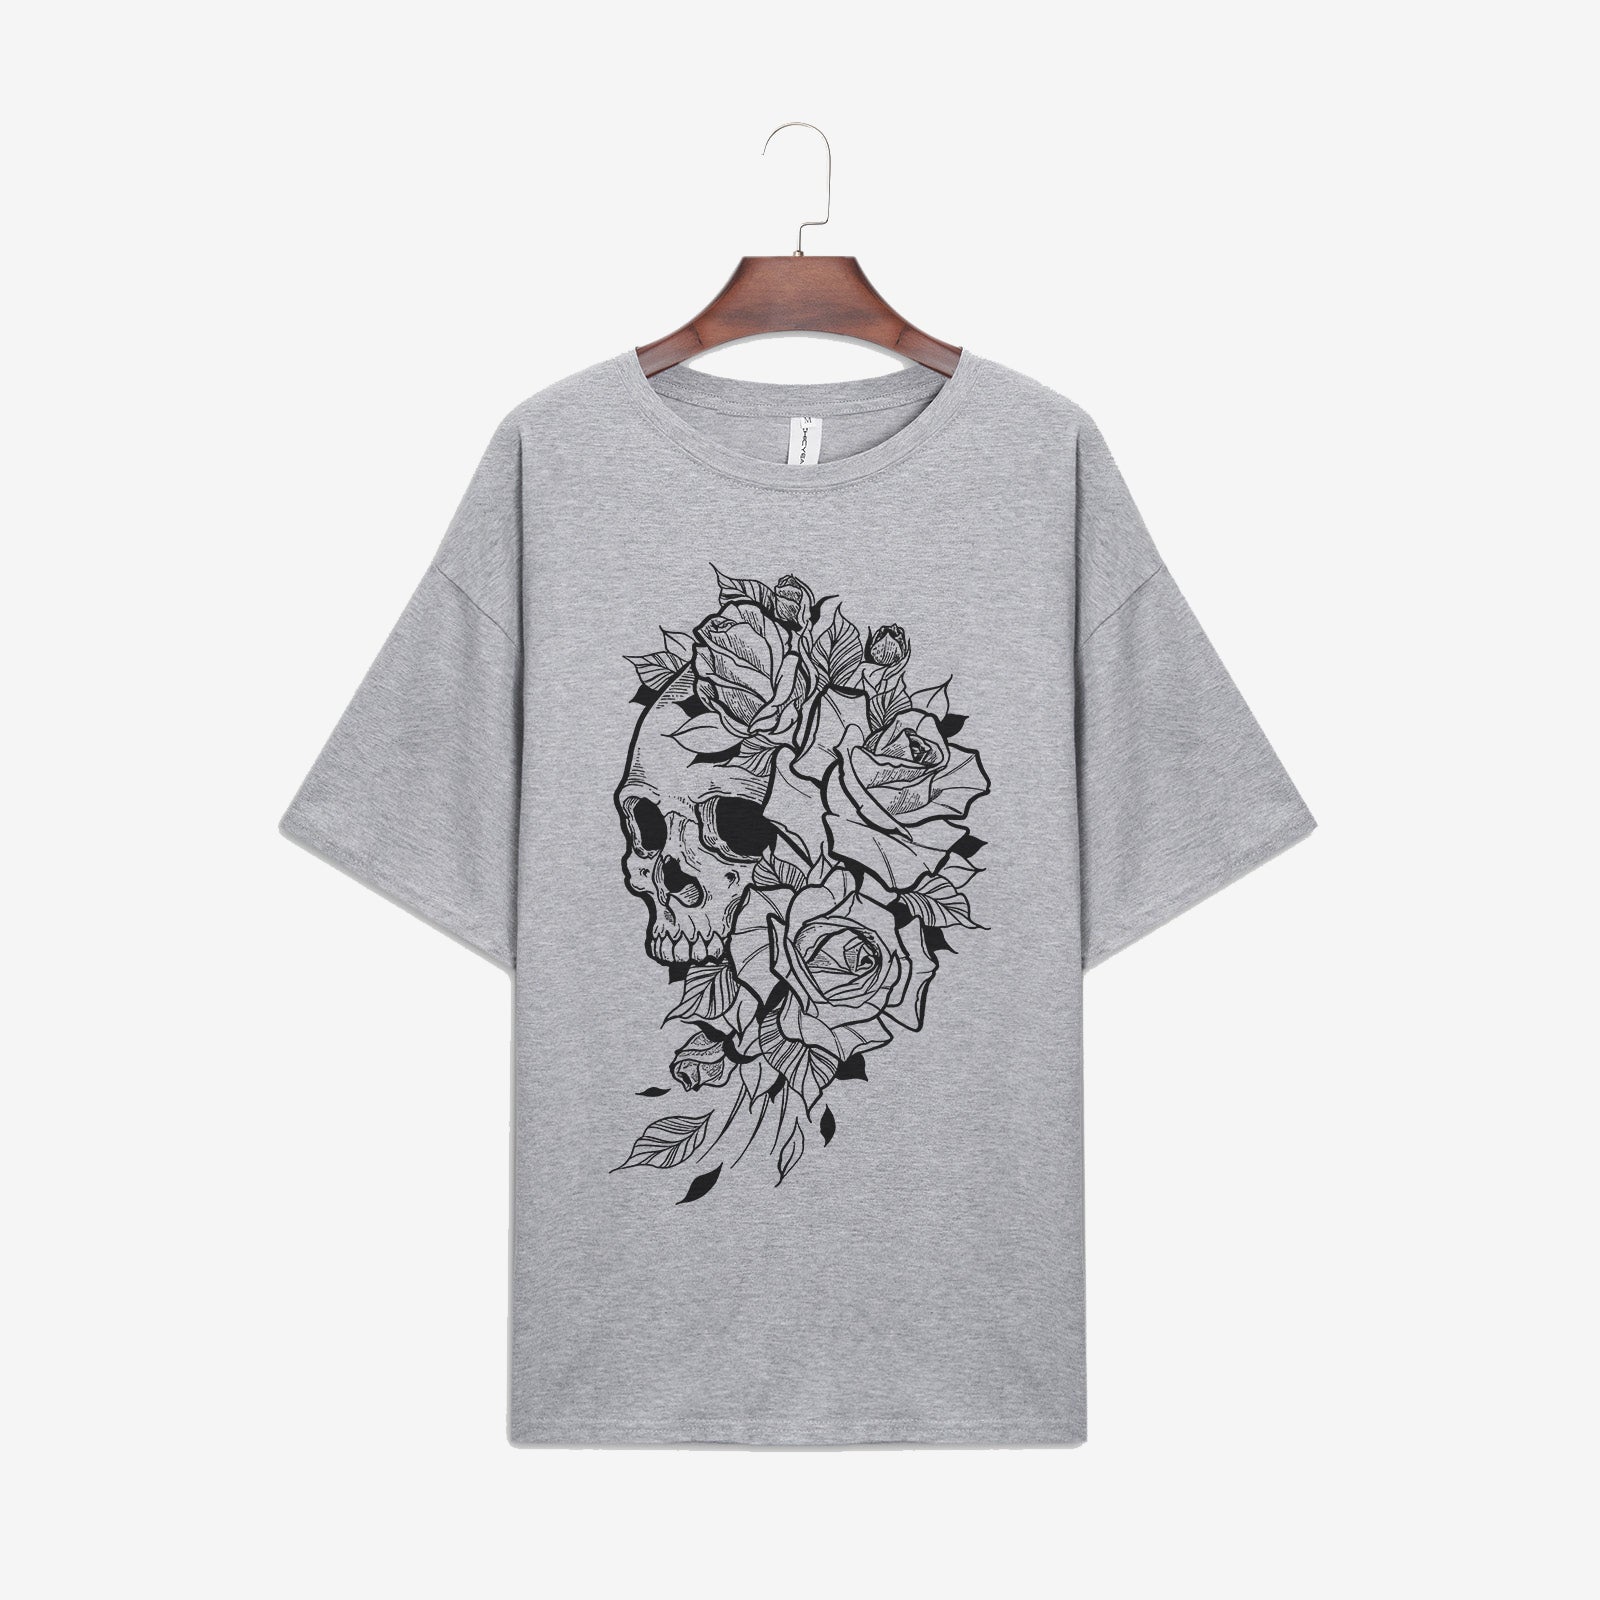 Minnieskull Skull Rose Print Casual T-Shirt - chicyea